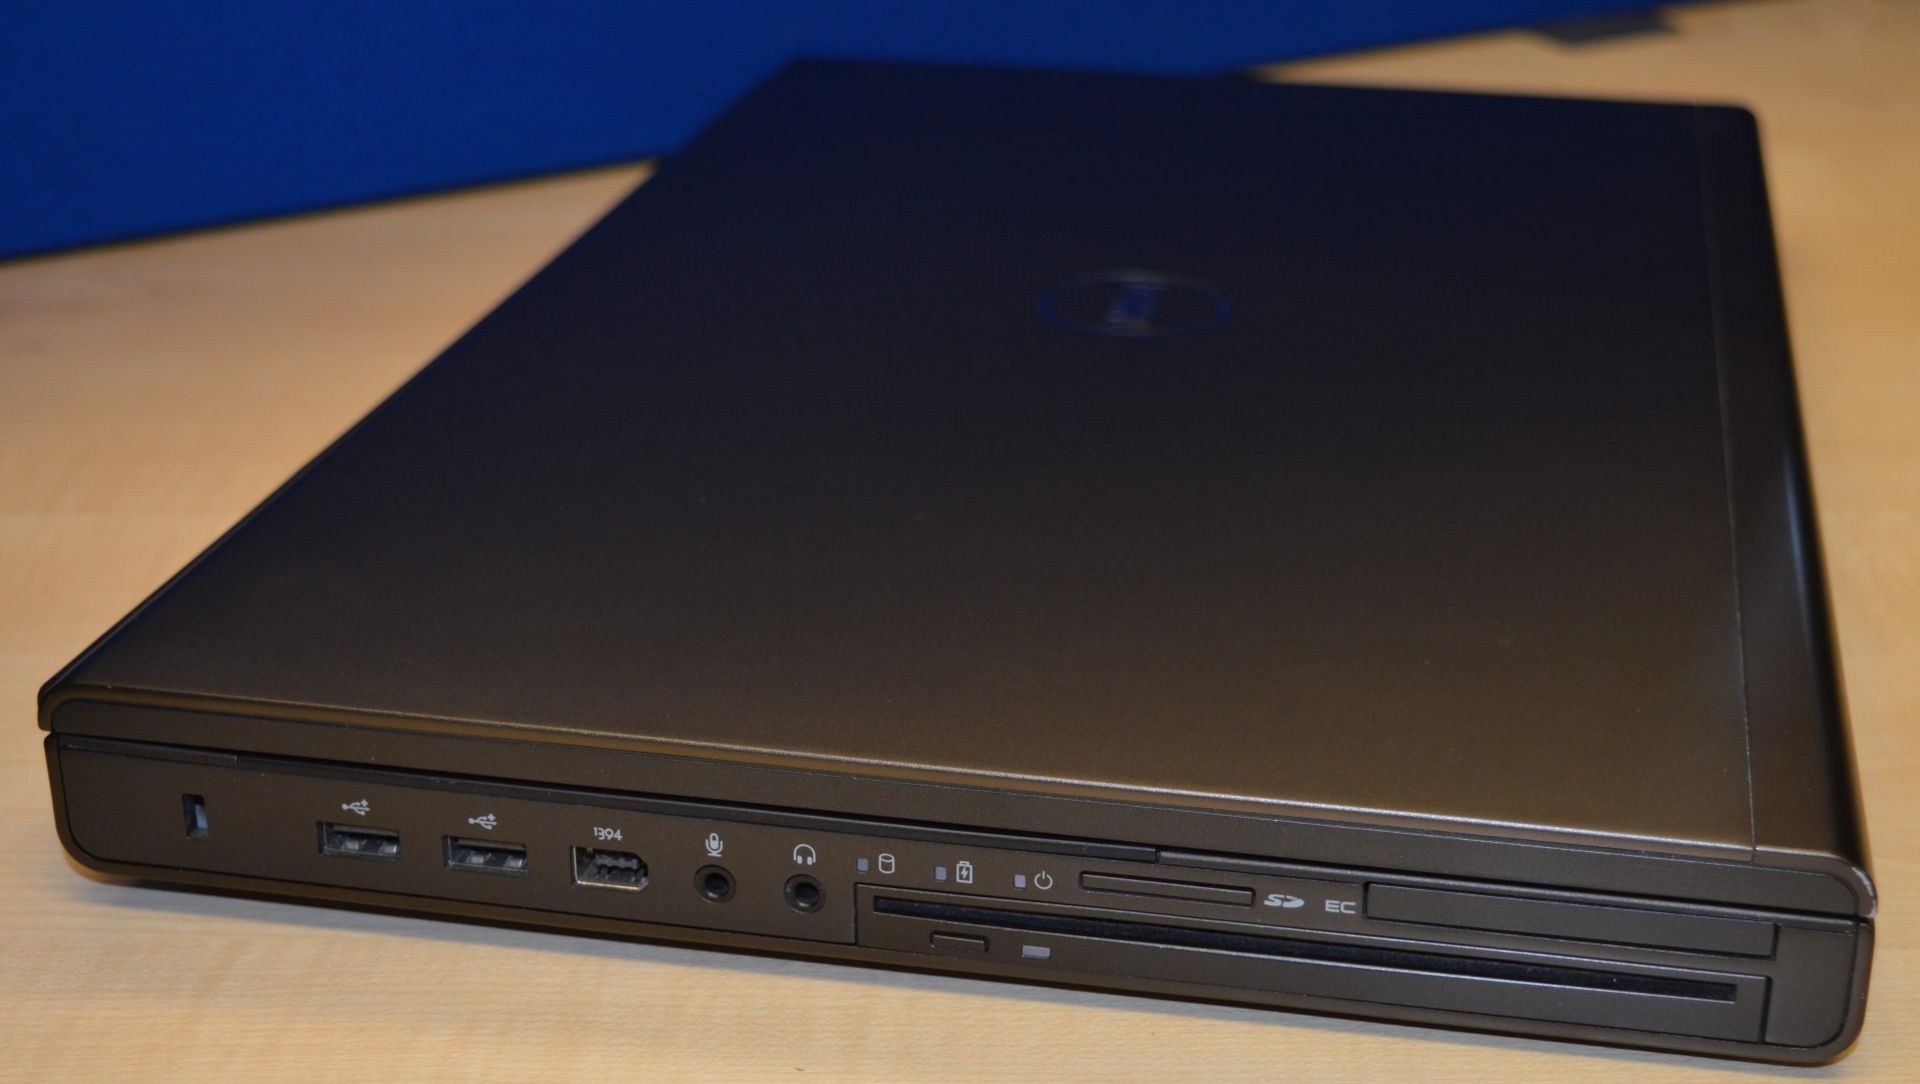 1 x Dell Precision M6700 Business Workstation 17 Inch Laptop - Intel Core i7 2.7ghz Quad Core - Image 11 of 22